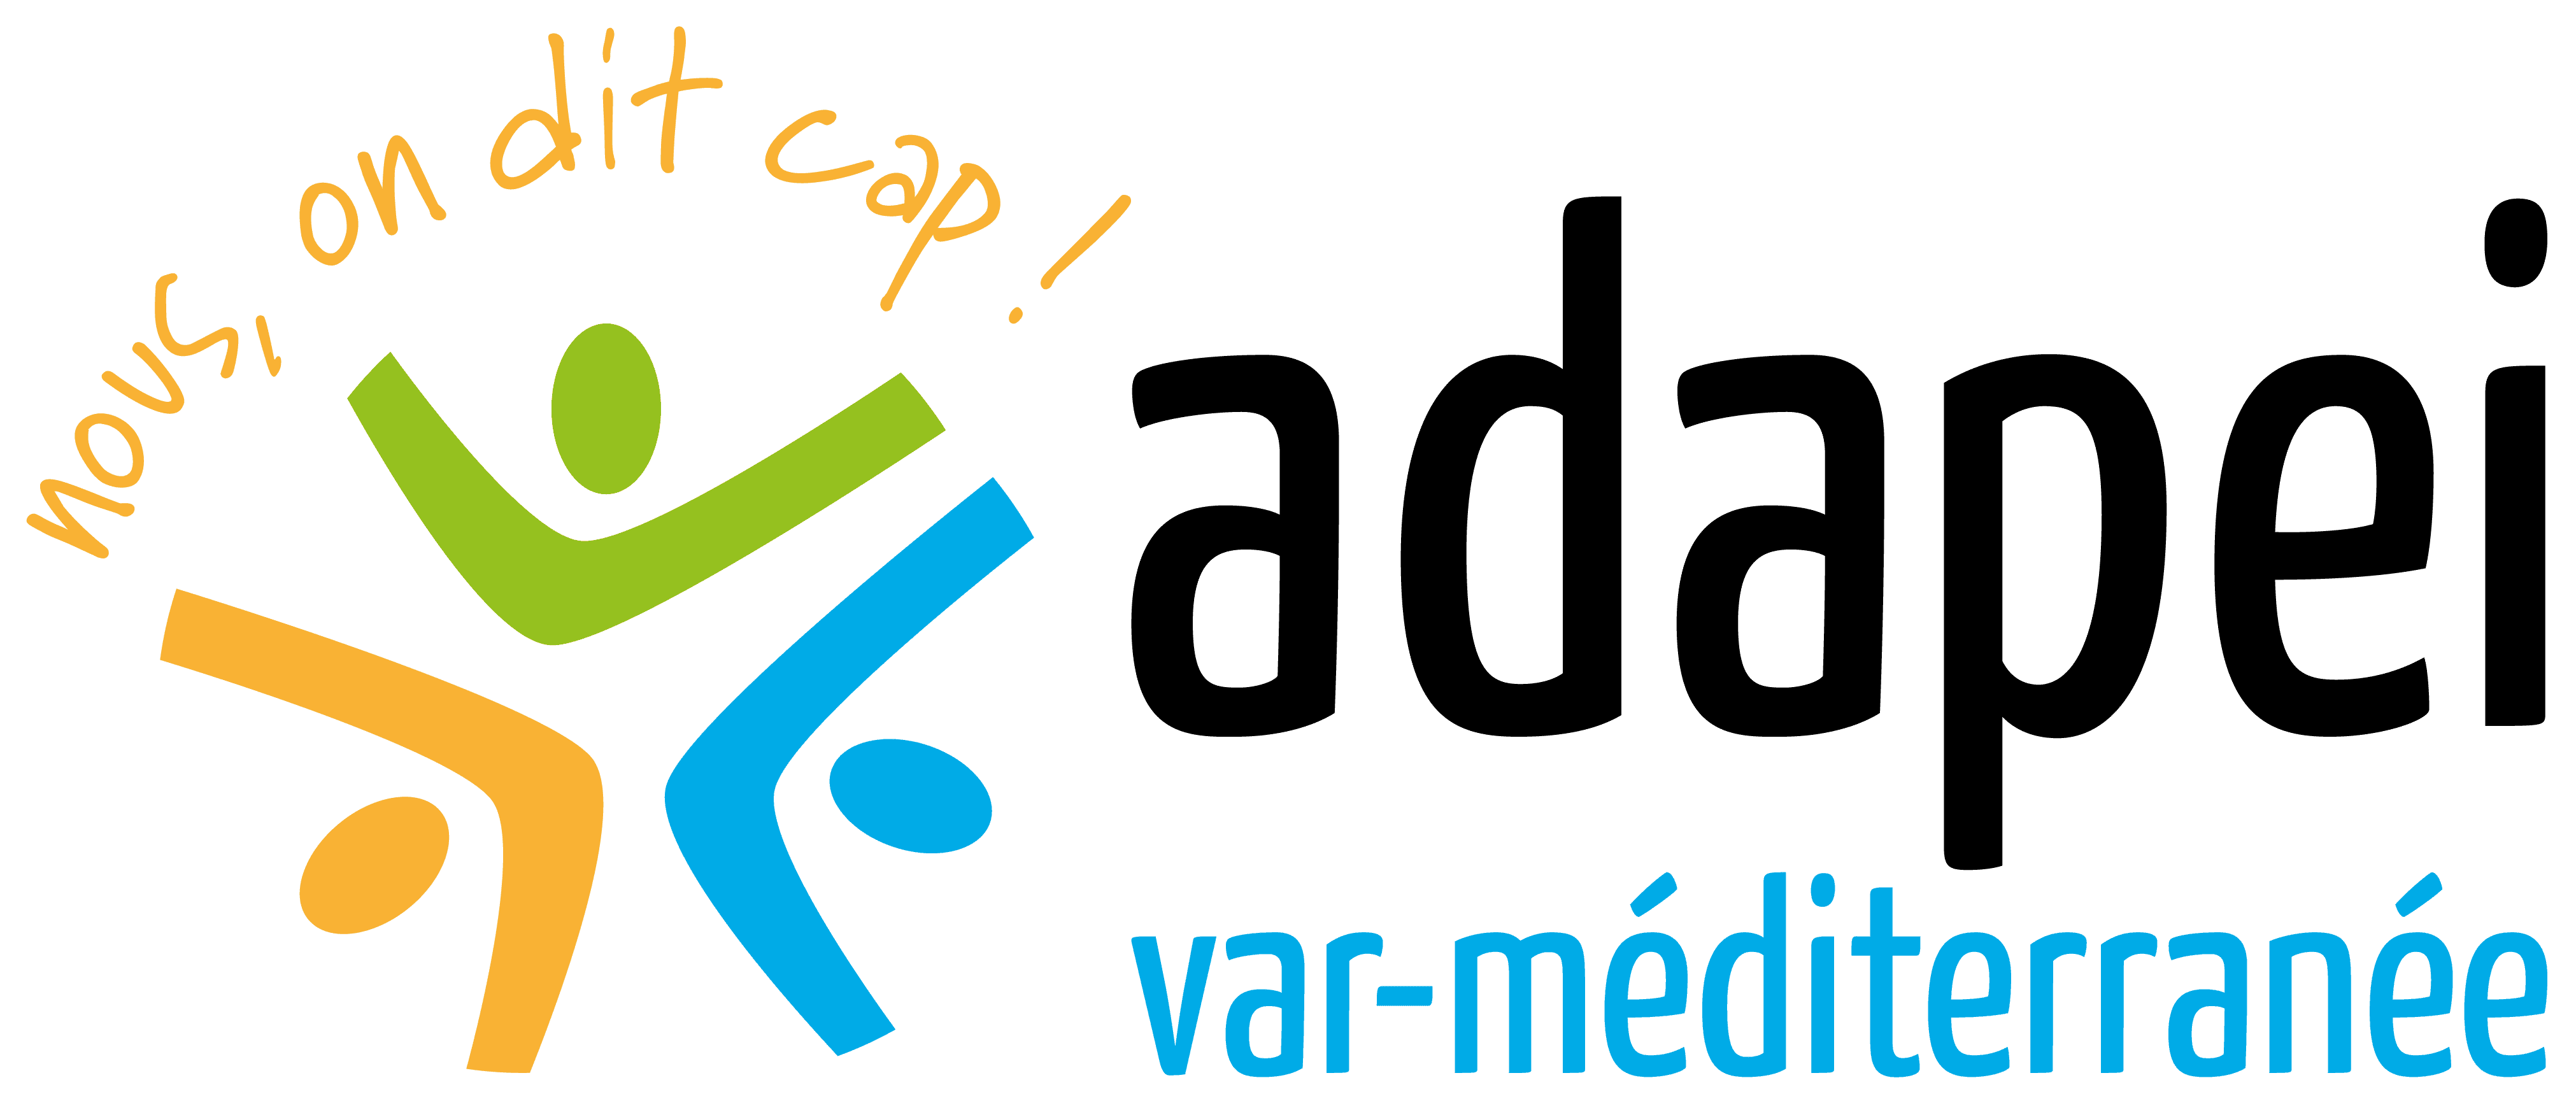 Logo ADAPEI